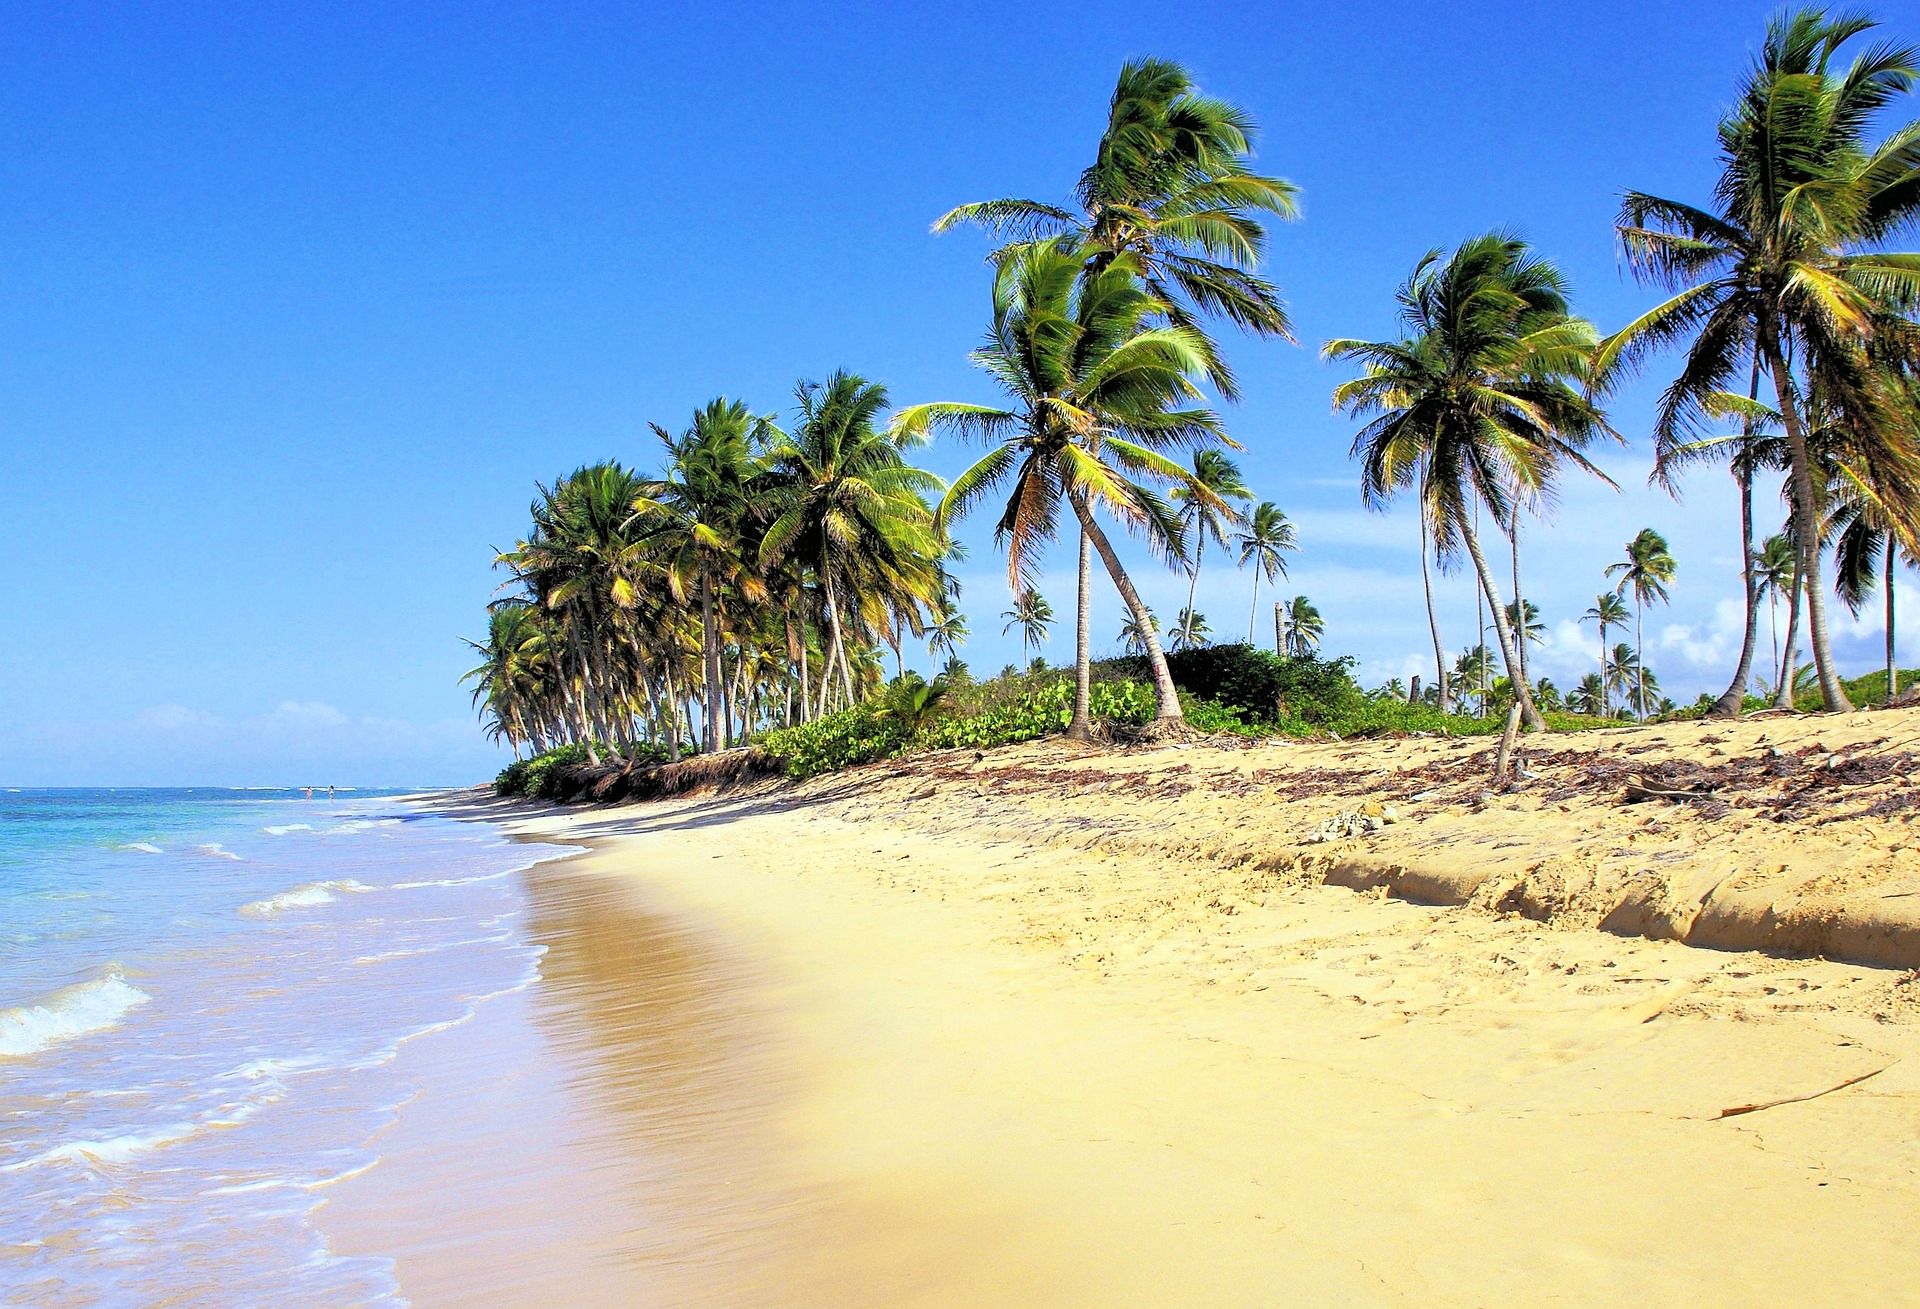 Enjoy a romantic getaway in the Dominican Republic